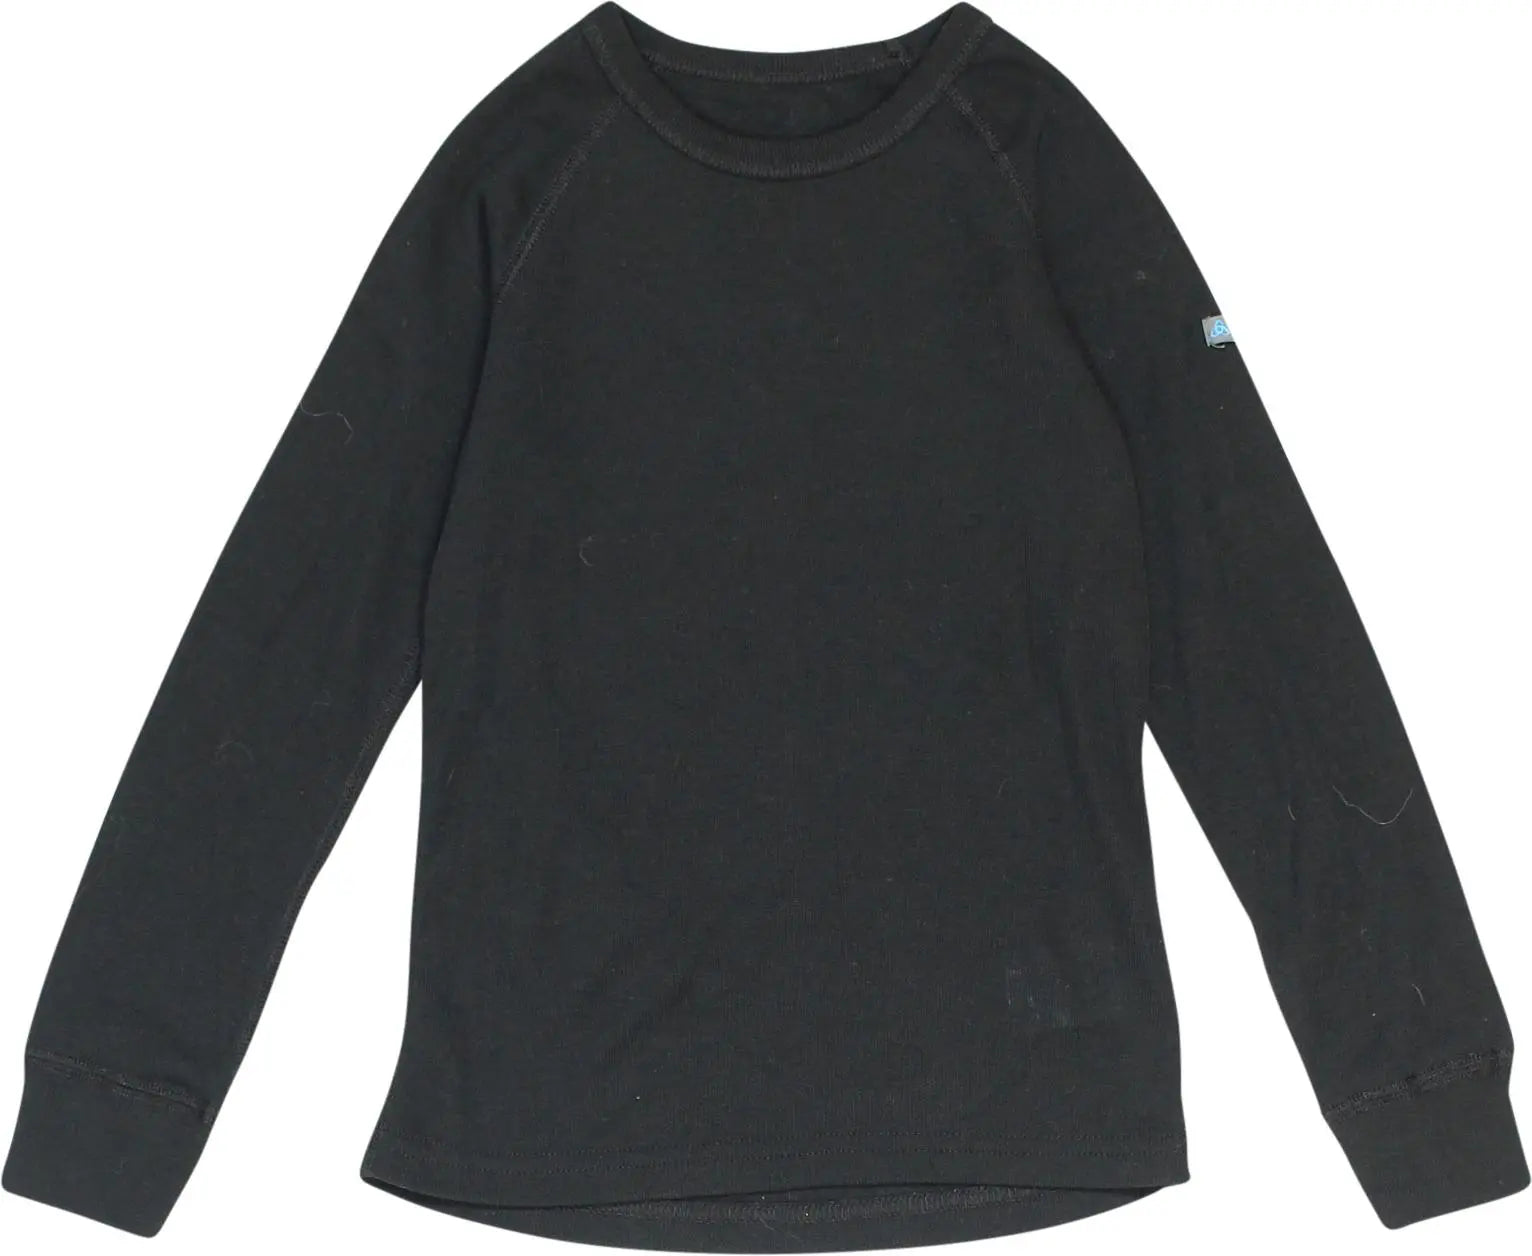 Odlo - Black Long Sleeve Shirt- ThriftTale.com - Vintage and second handclothing